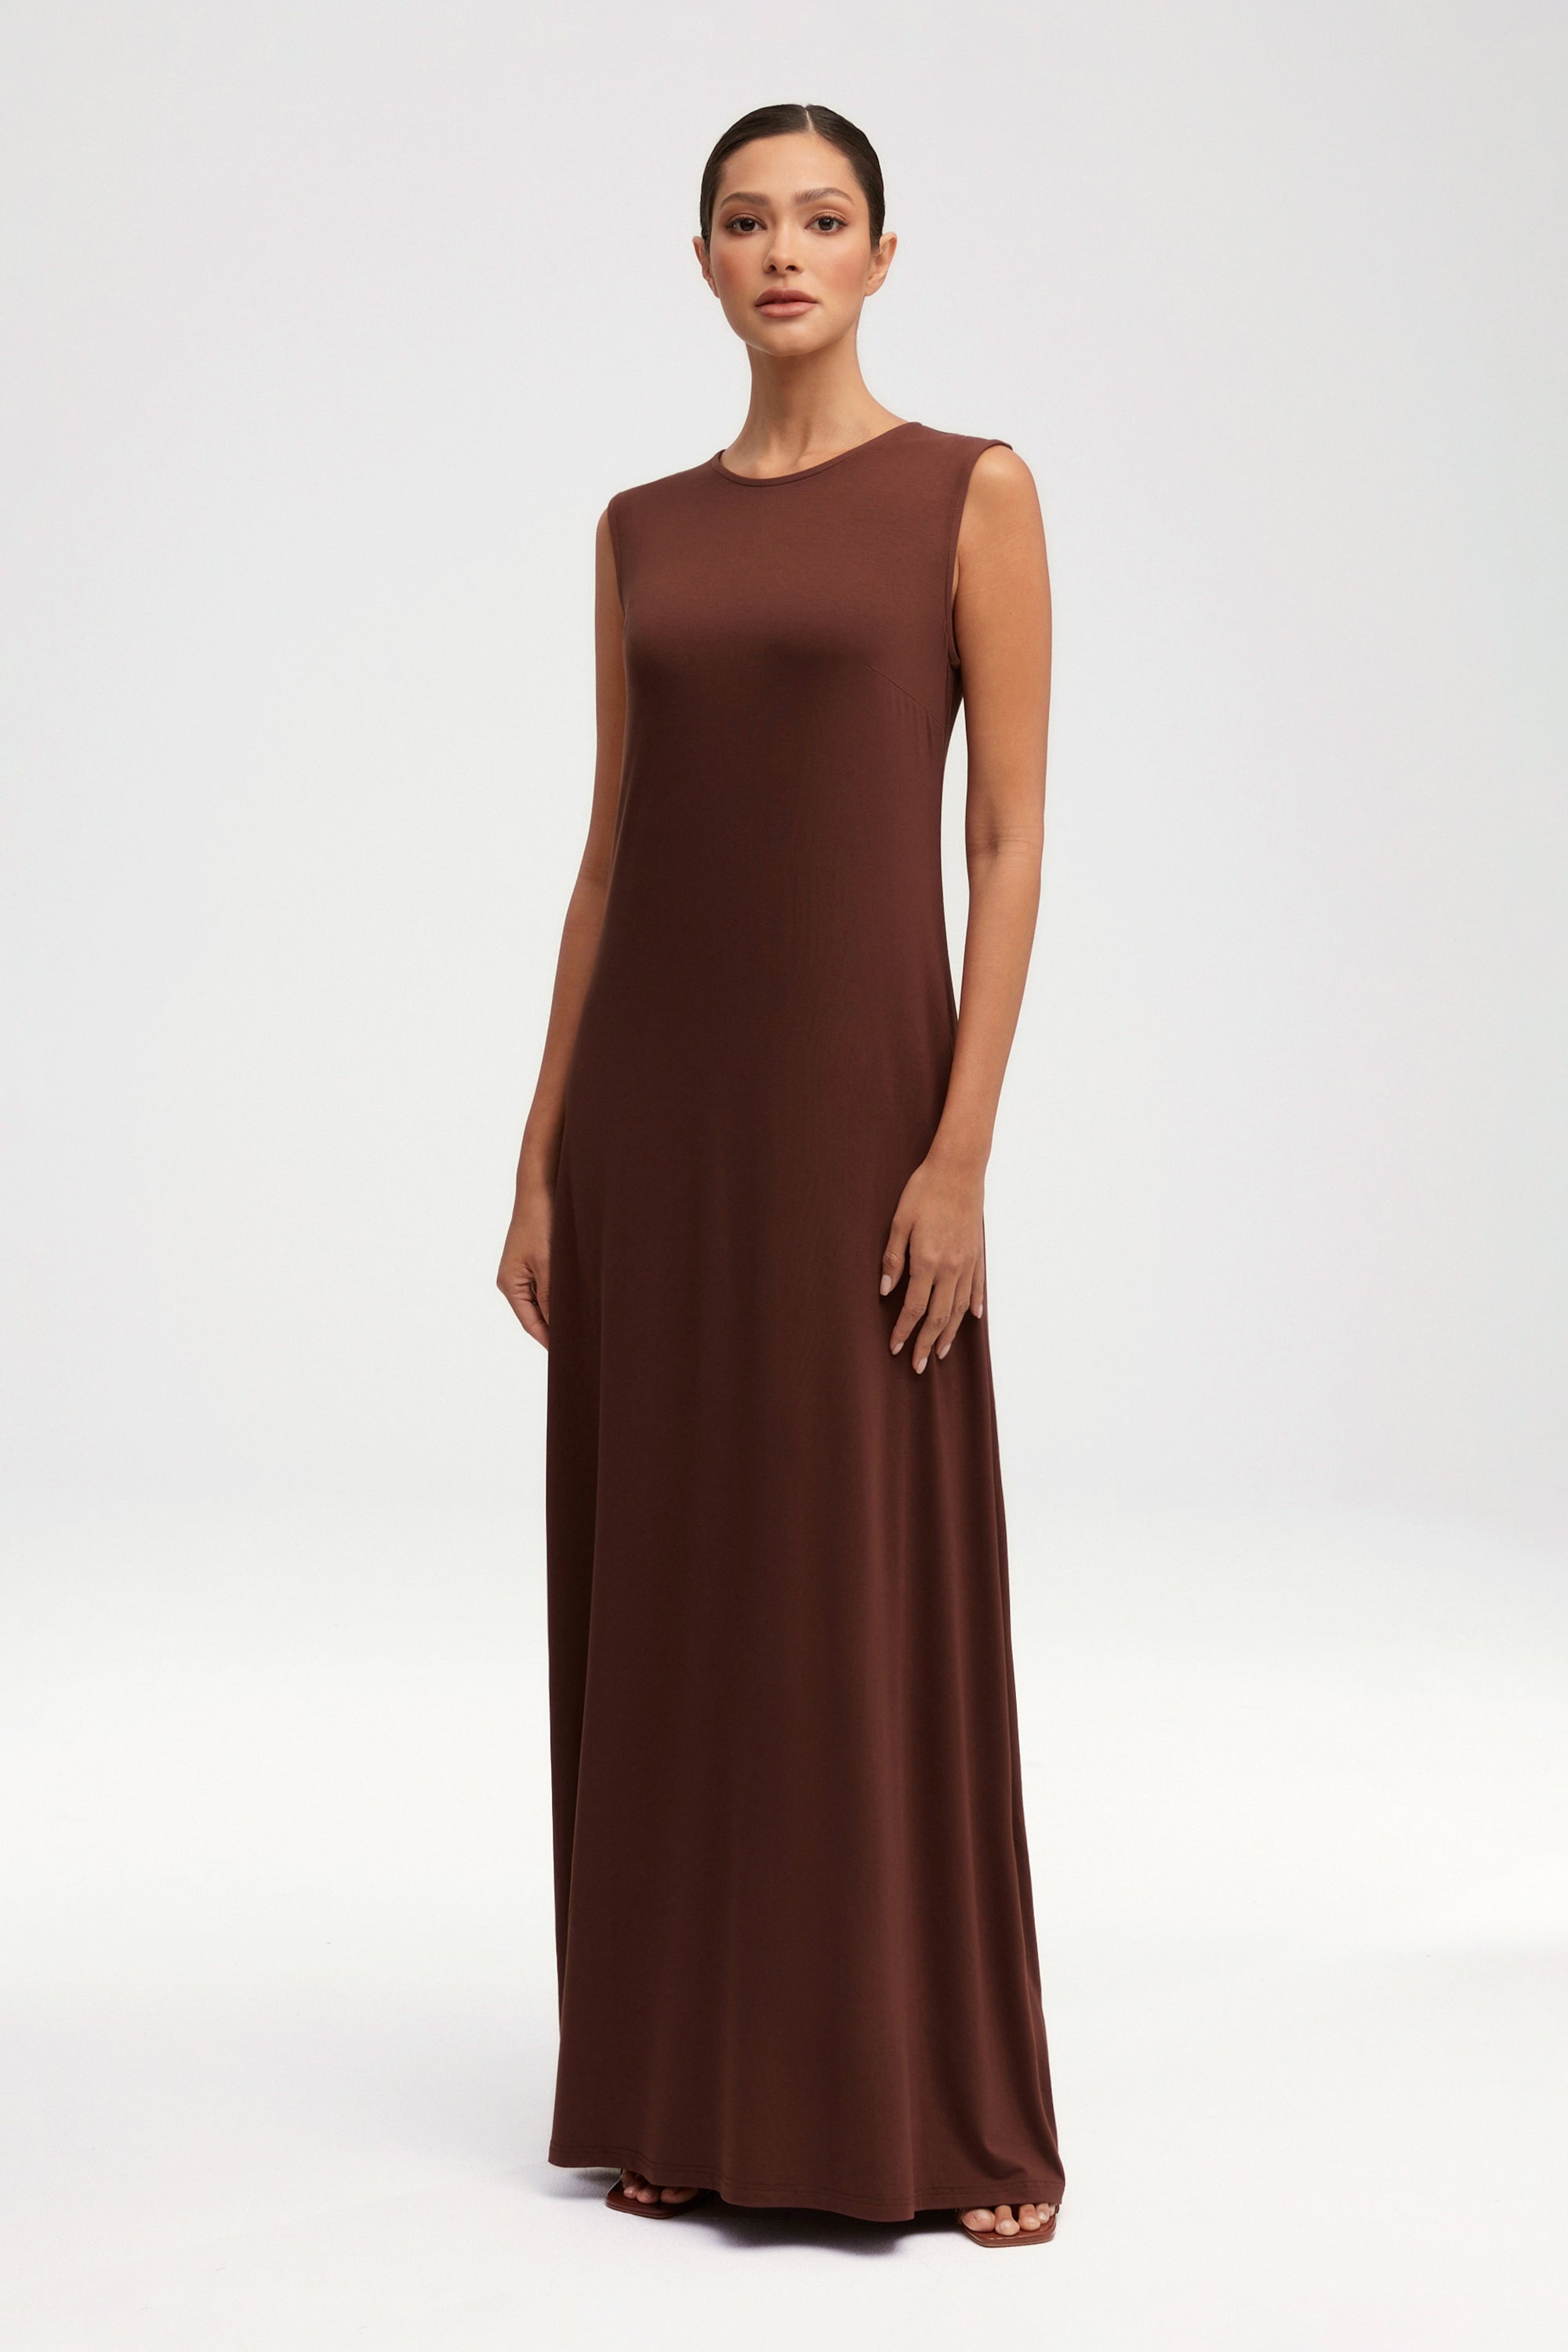 Jenin Jersey Maxi Dress - Chocolate Clothing Veiled 